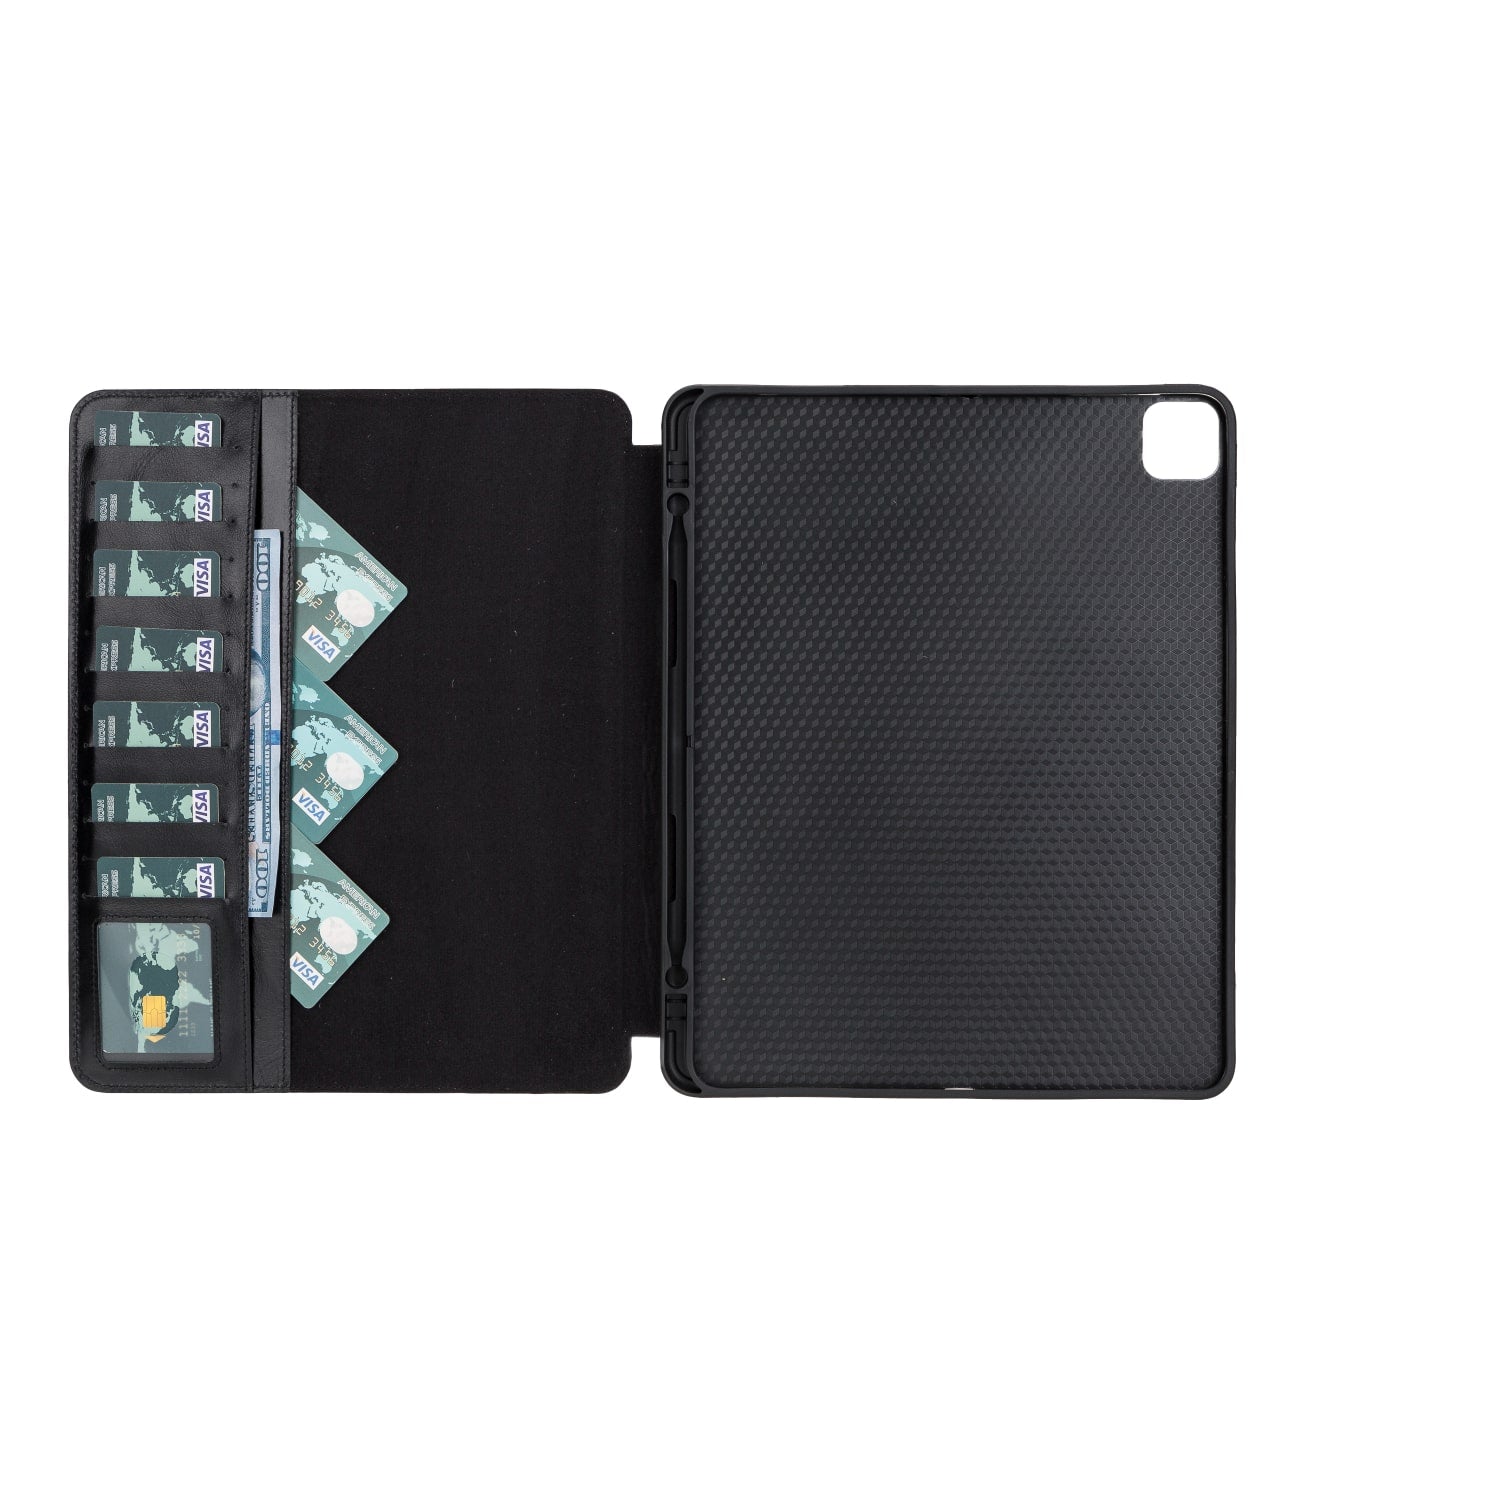 Black Leather iPad Pro 12.9 Inc Smart Folio Case with Apple Pen Holder - Bomonti - 2